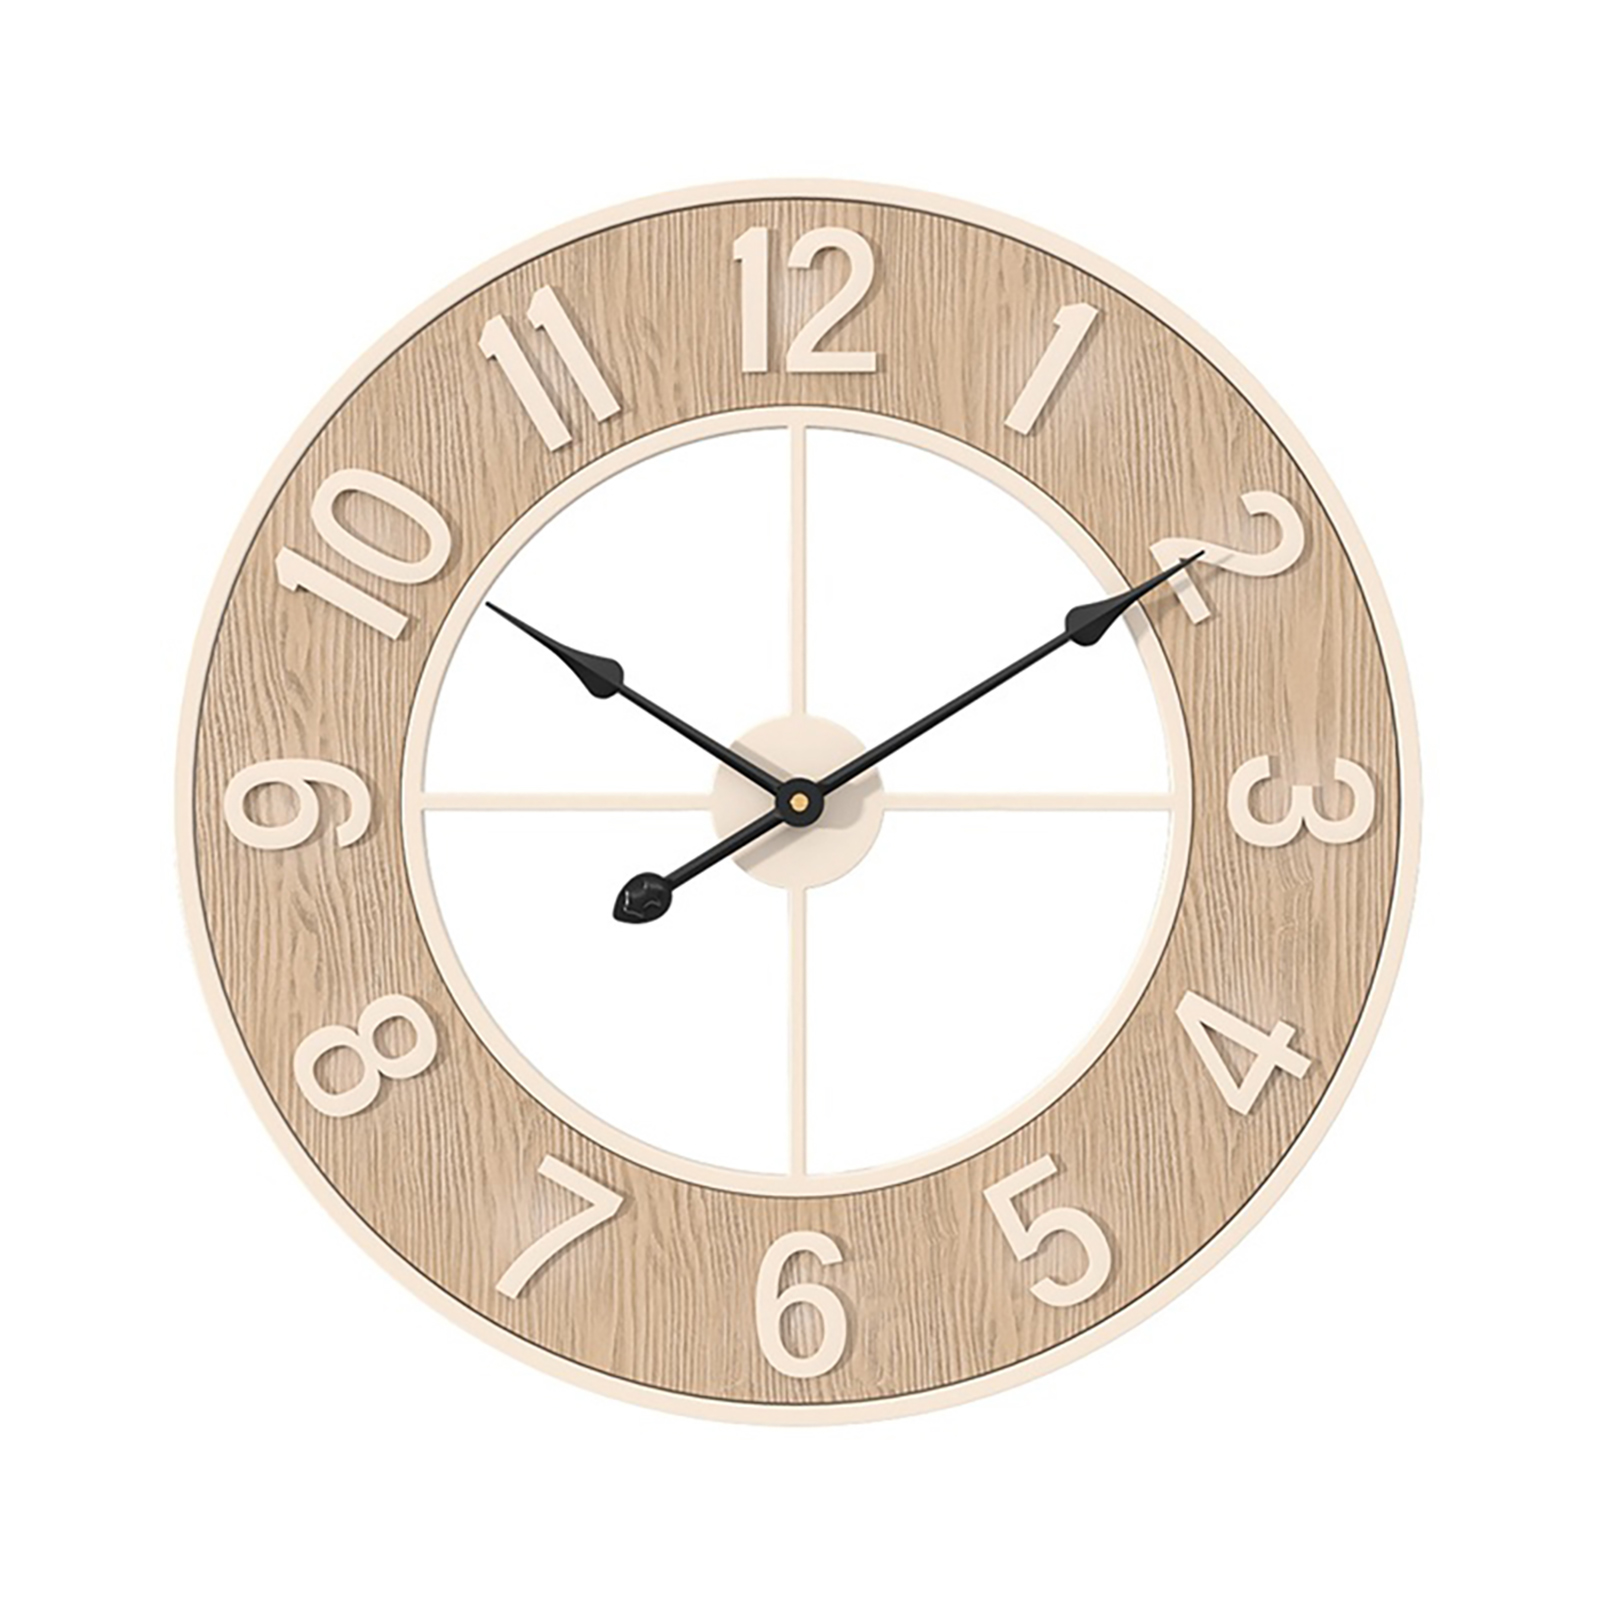 60cm Wall Clocks Silent Non Ticking Wood Grain Wall Clock For Living Room Bedroom Kitchen Office Classroom Decor